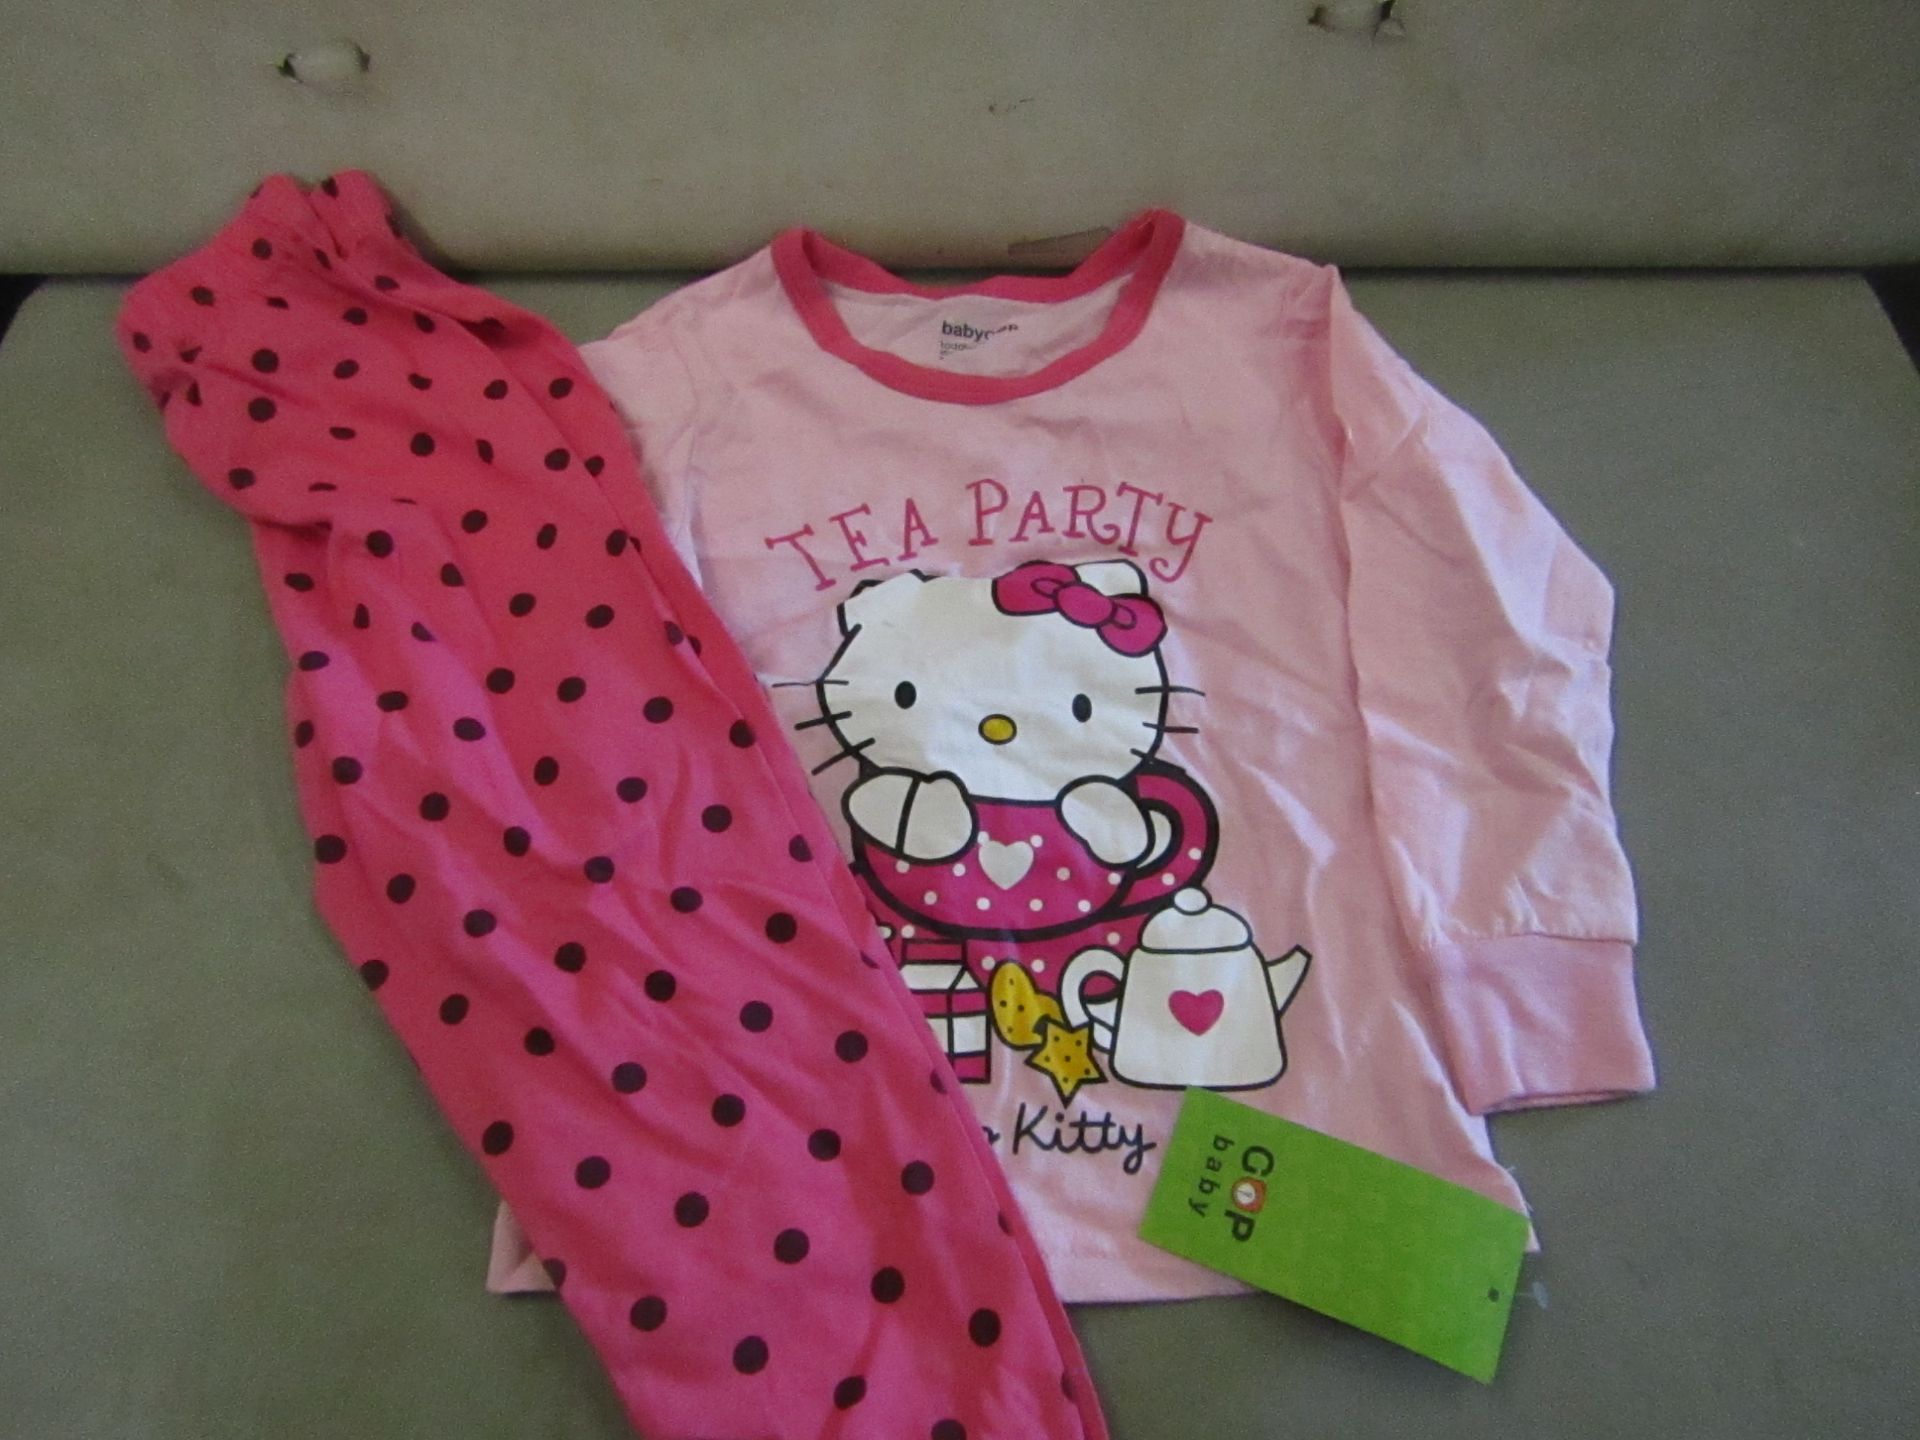 4 X Pairs of Baby Gap Girls Pyjamas Aged 2yrs New & Packaged